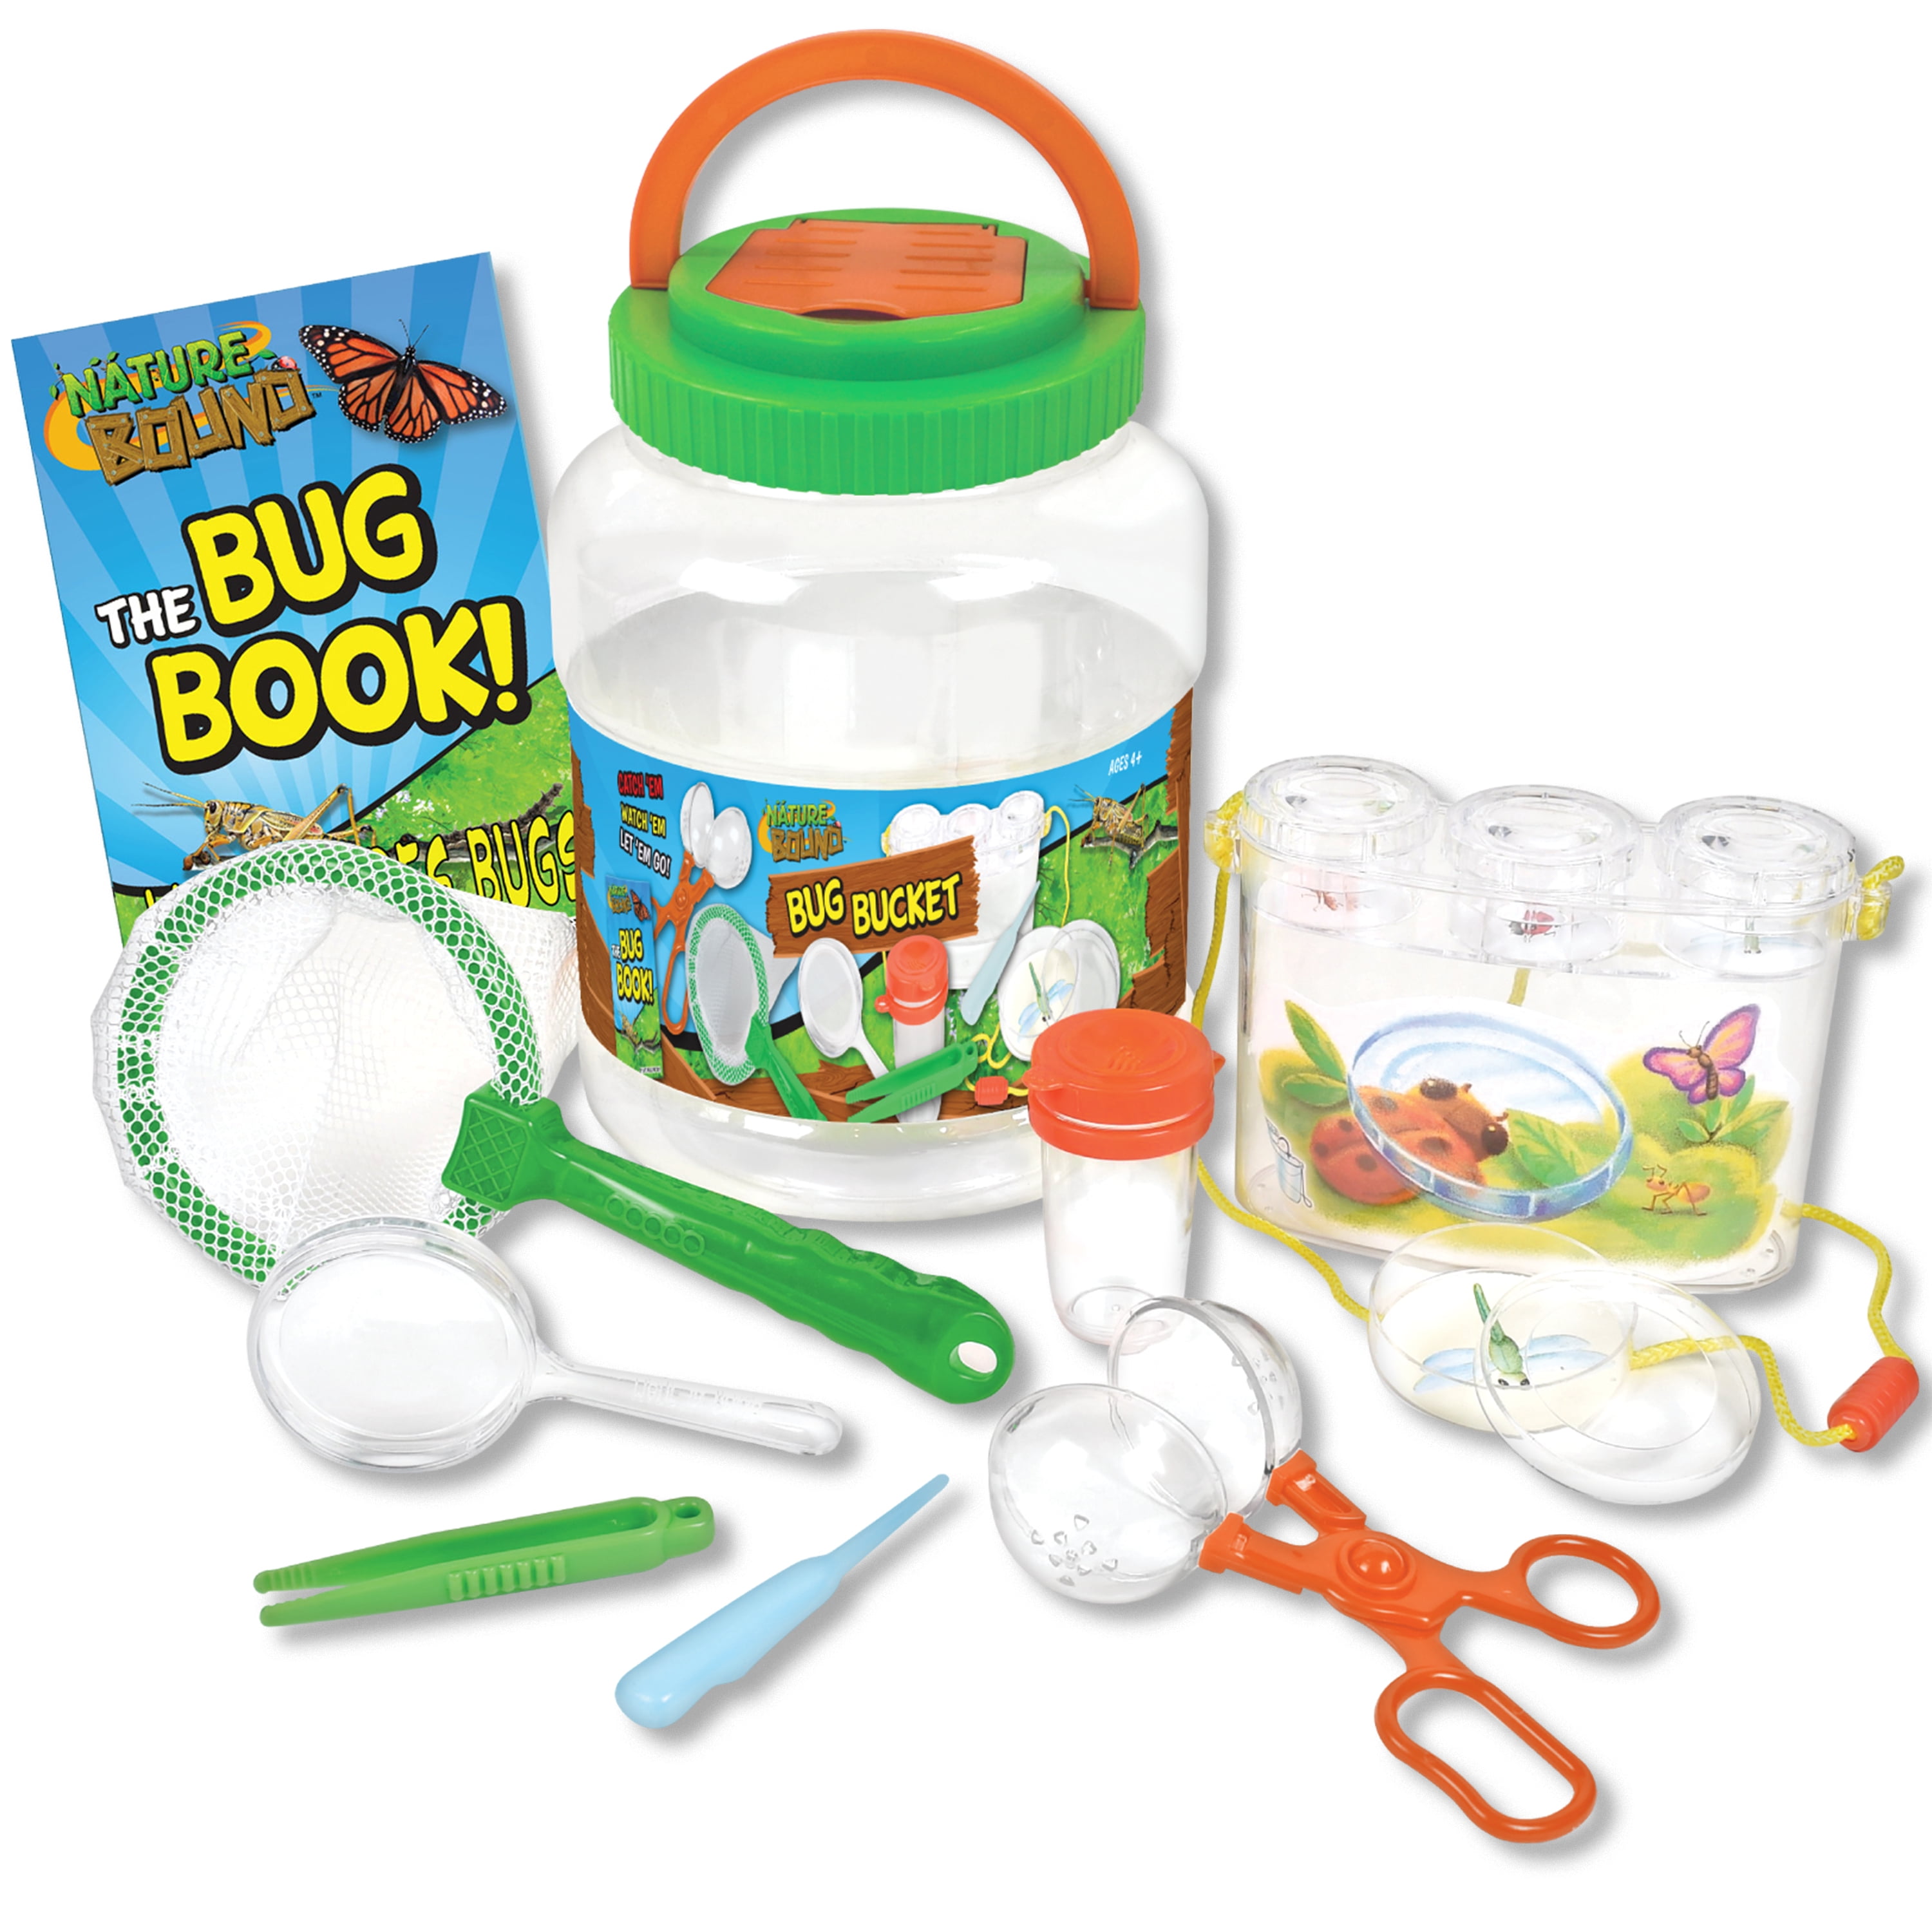 7 piece Bug Catcher Kit with Plastic Habitat Bucket, Exploration Set for Kids by Nature Bound Toys